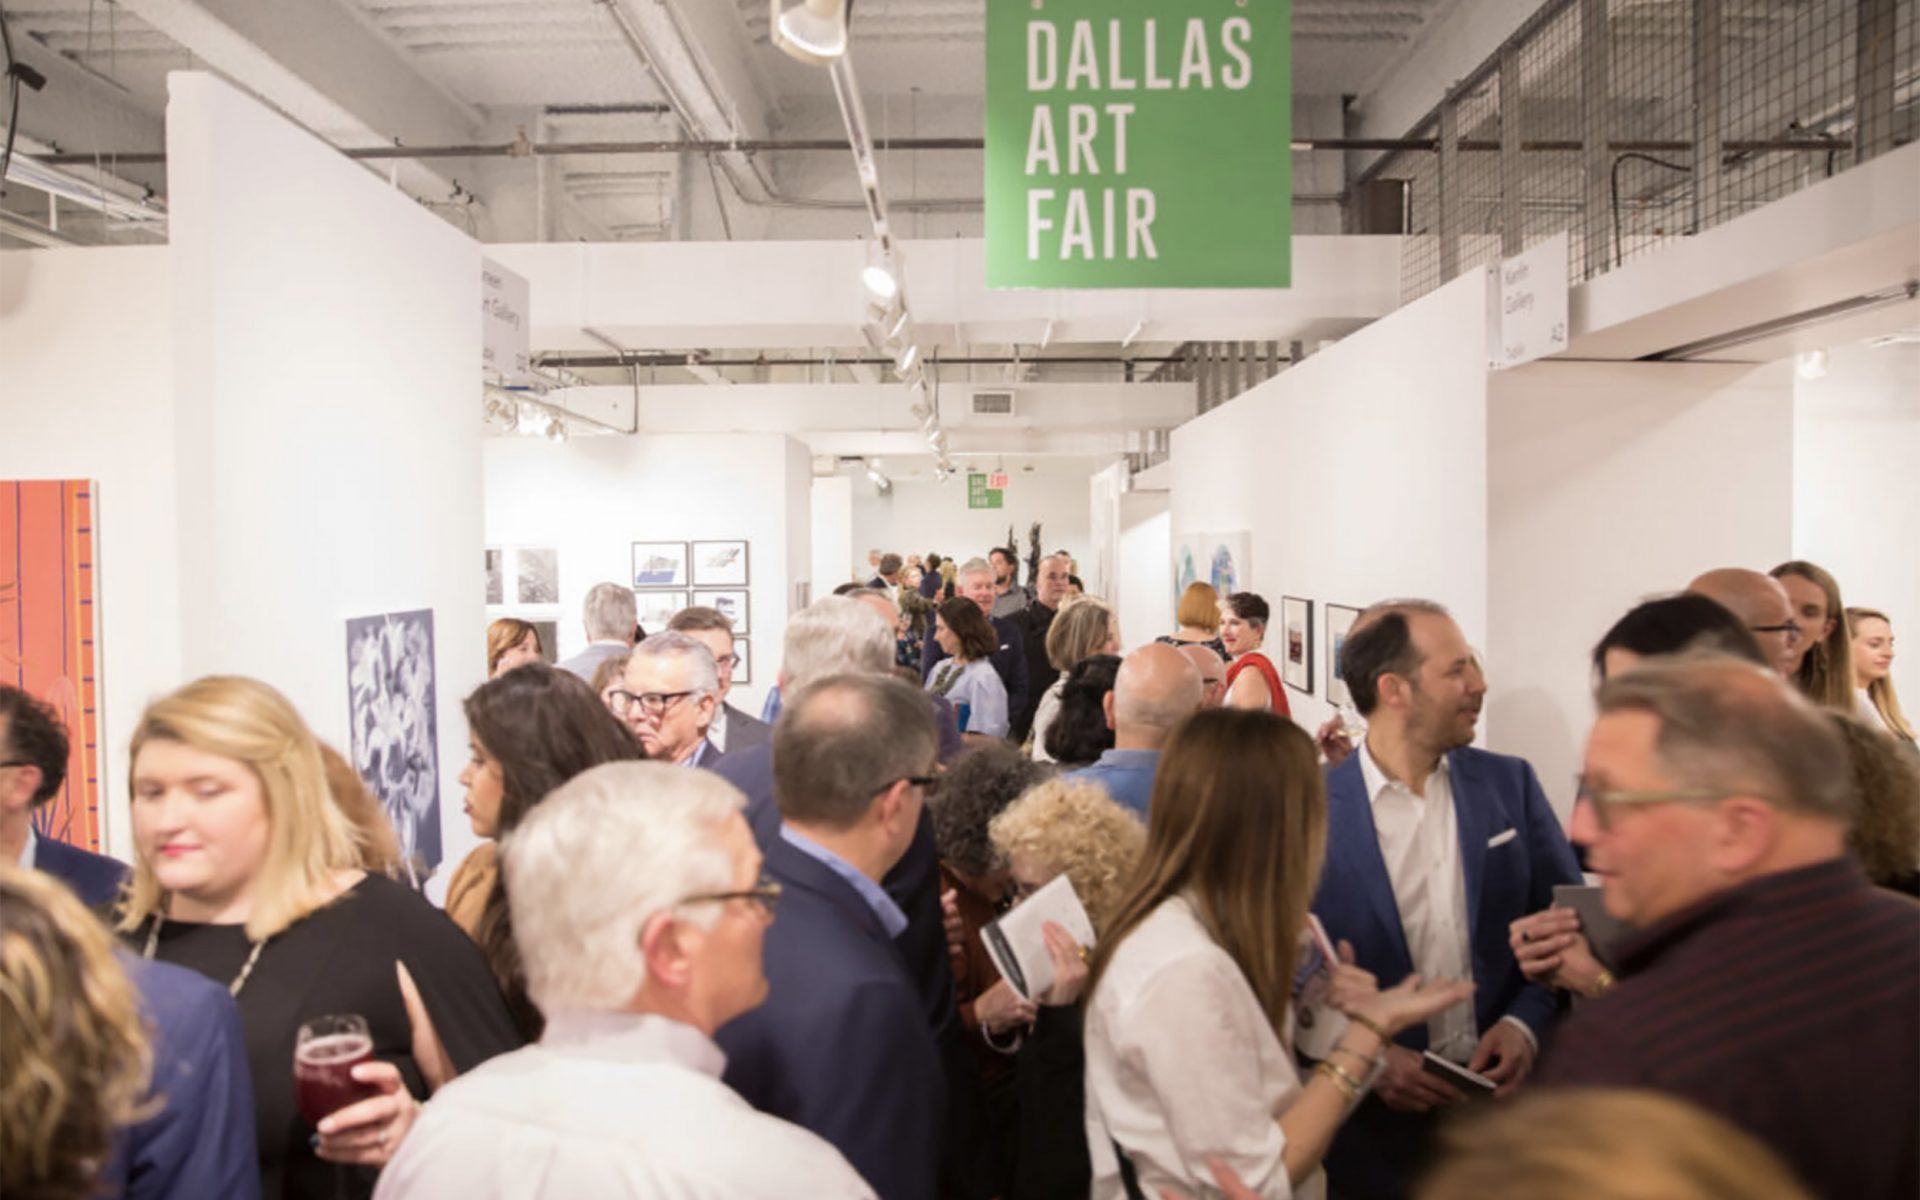 Dallas Art Fair Announces Exhibitors for 2019 Edition